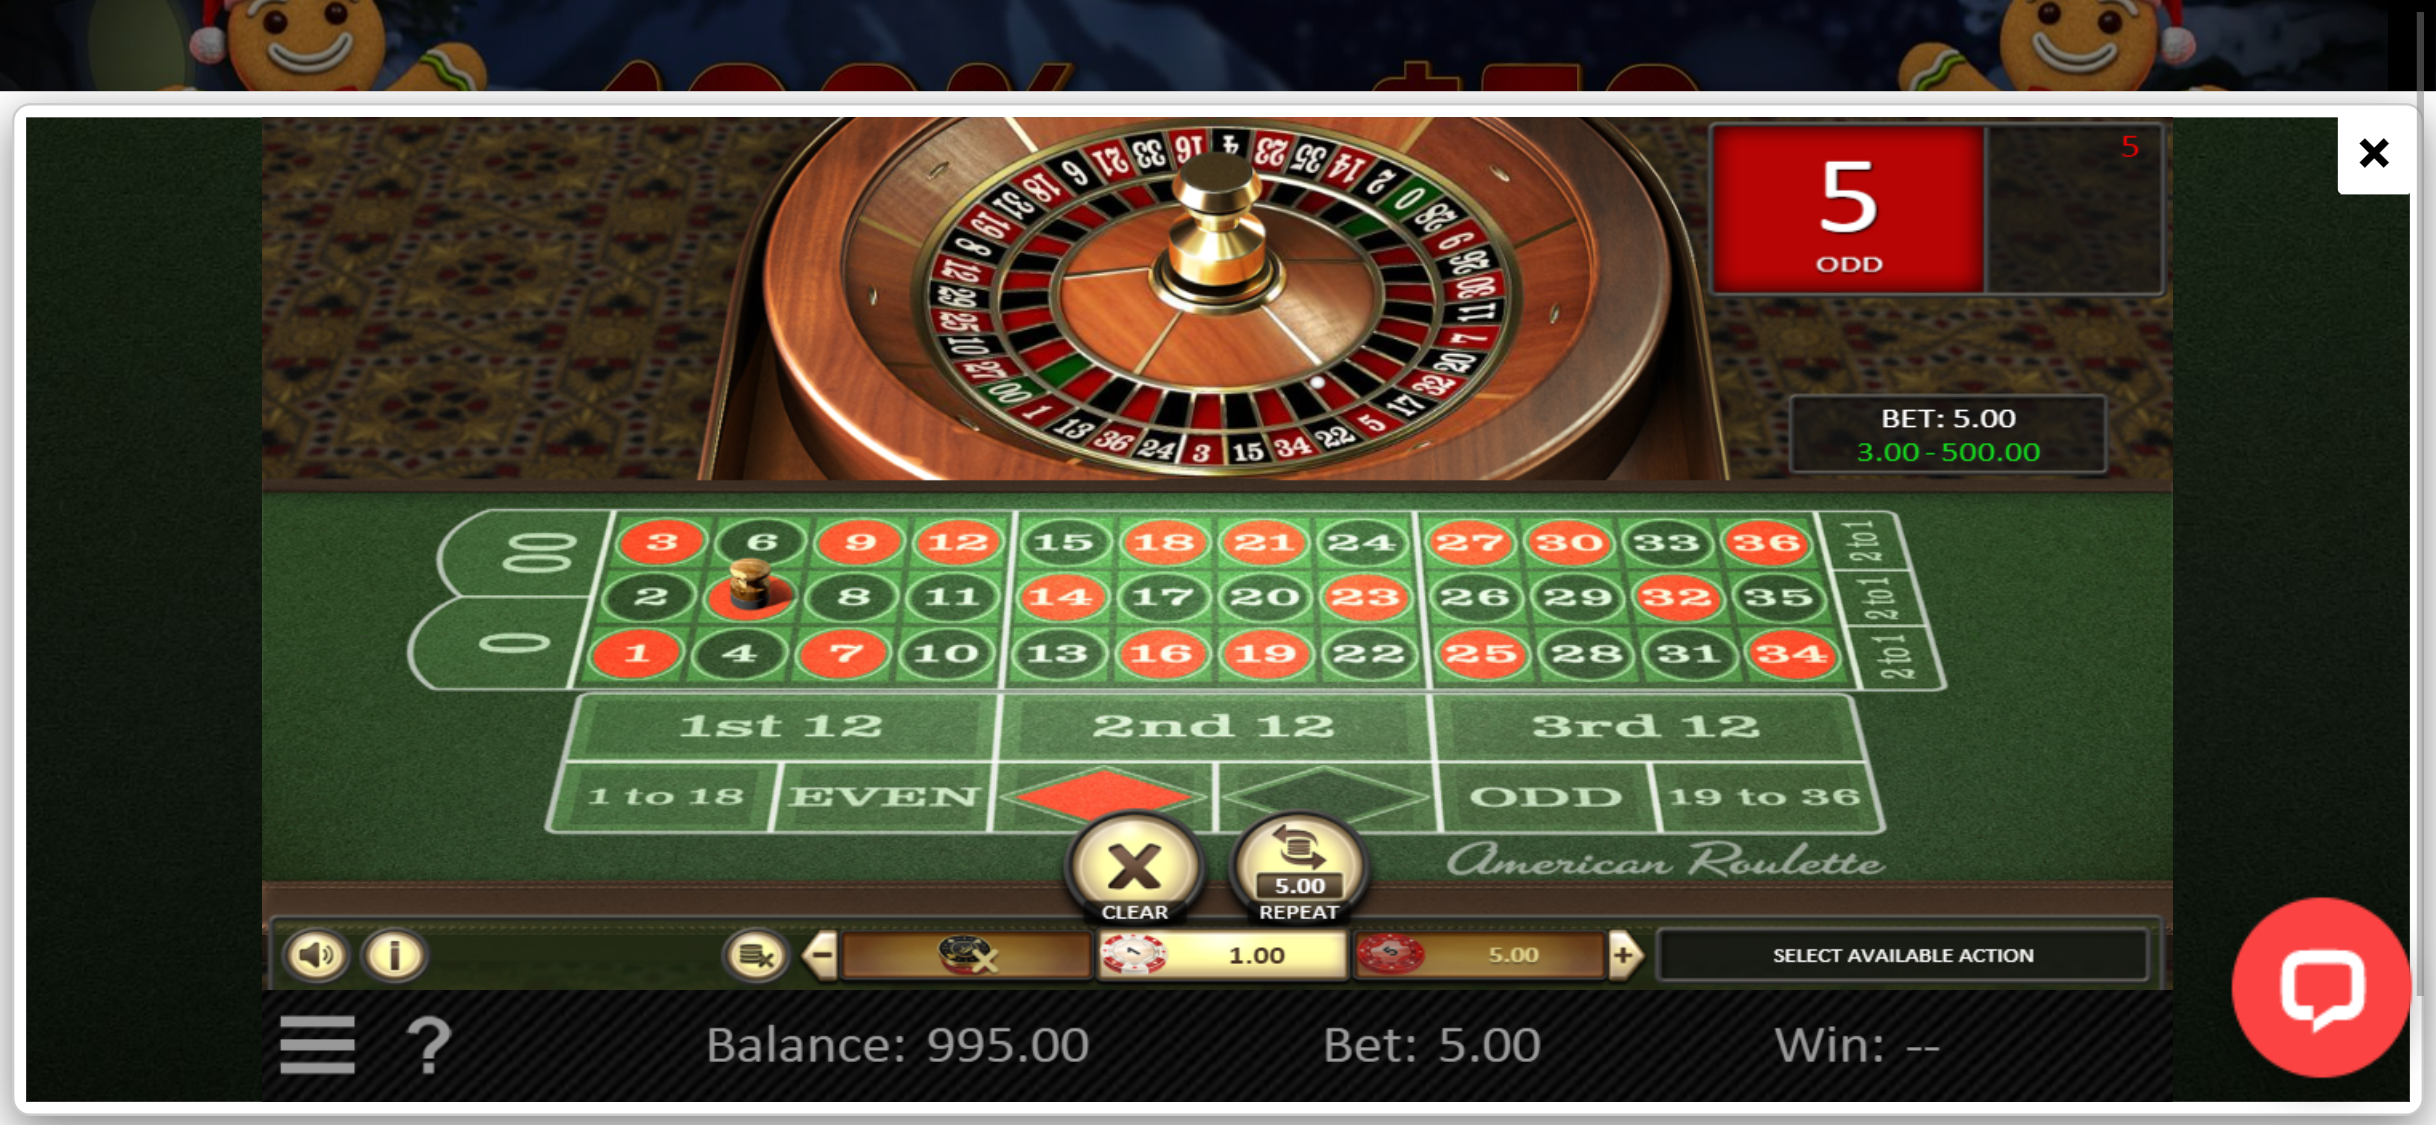 VIP Club Player Casino Mobile Casino Games Review